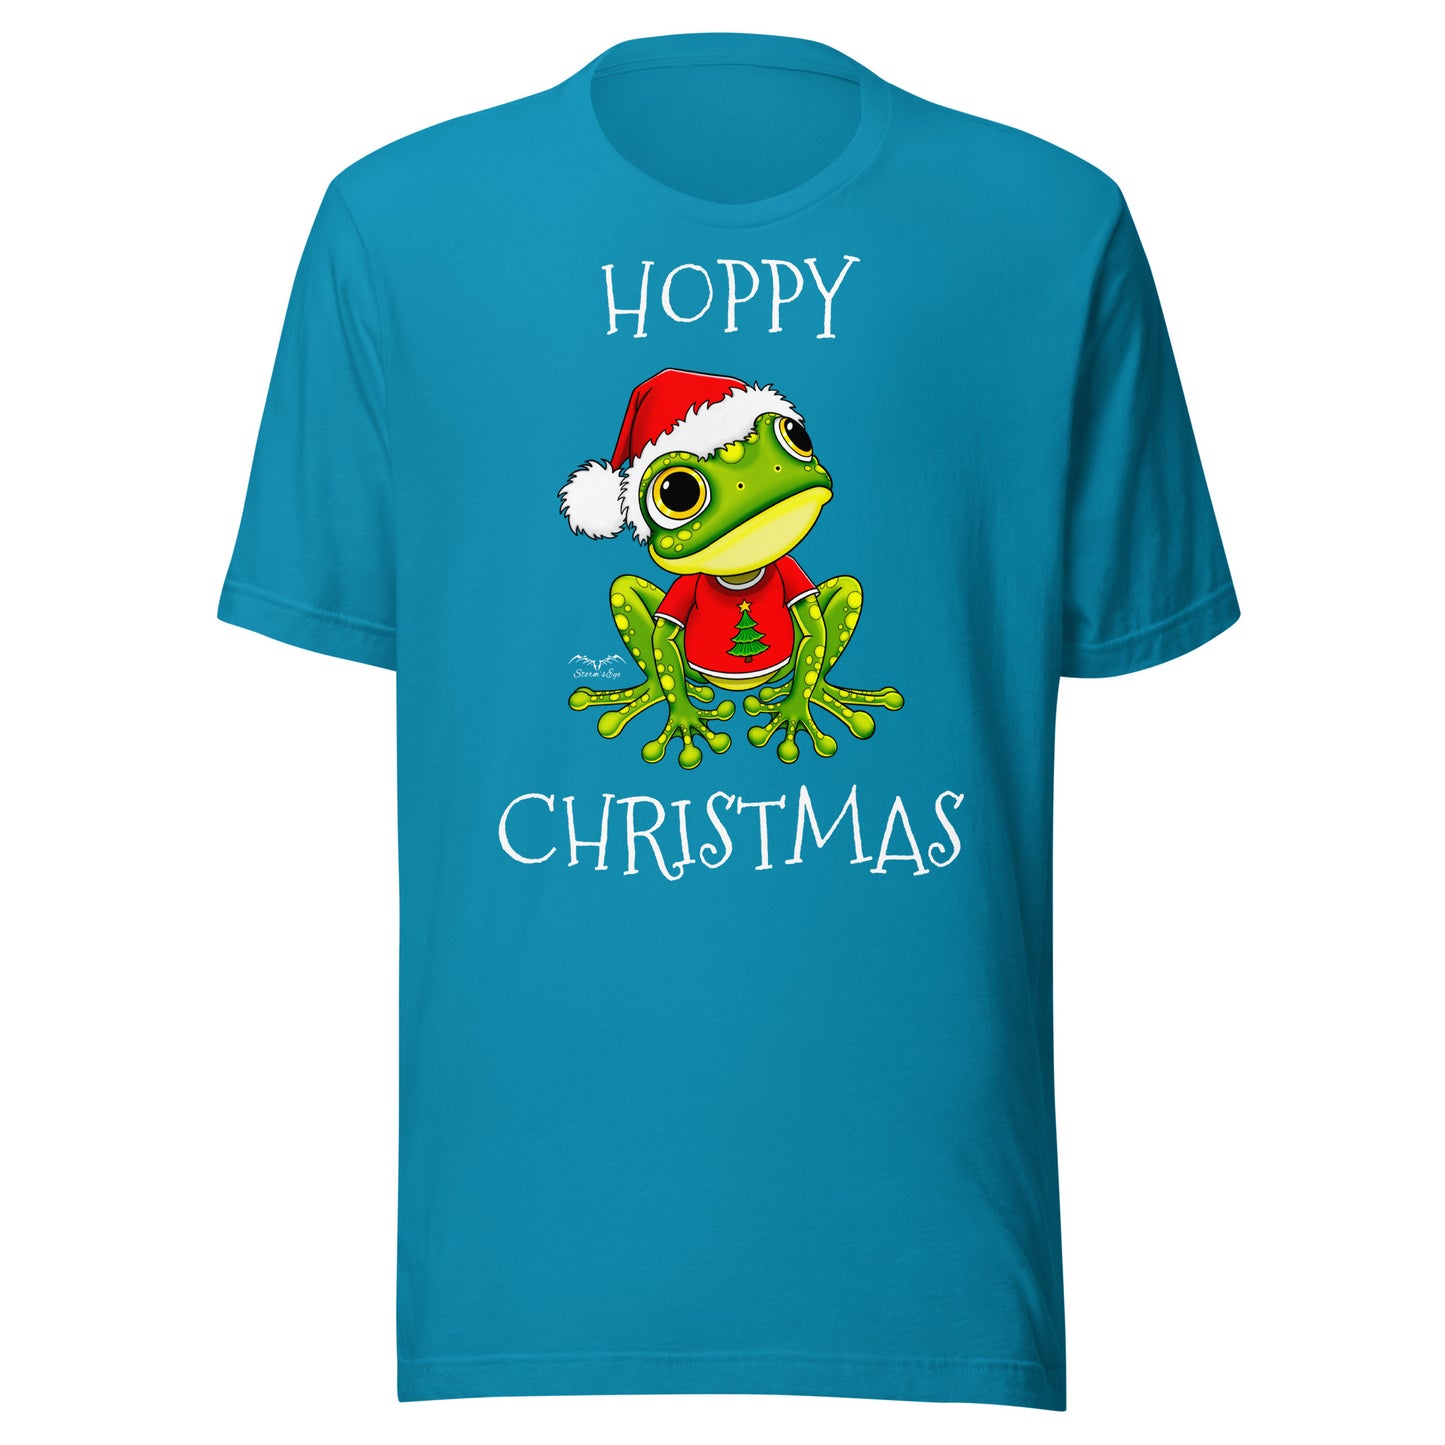 stormseye design hoppy christmas santa frog T shirt, flat view bright blue